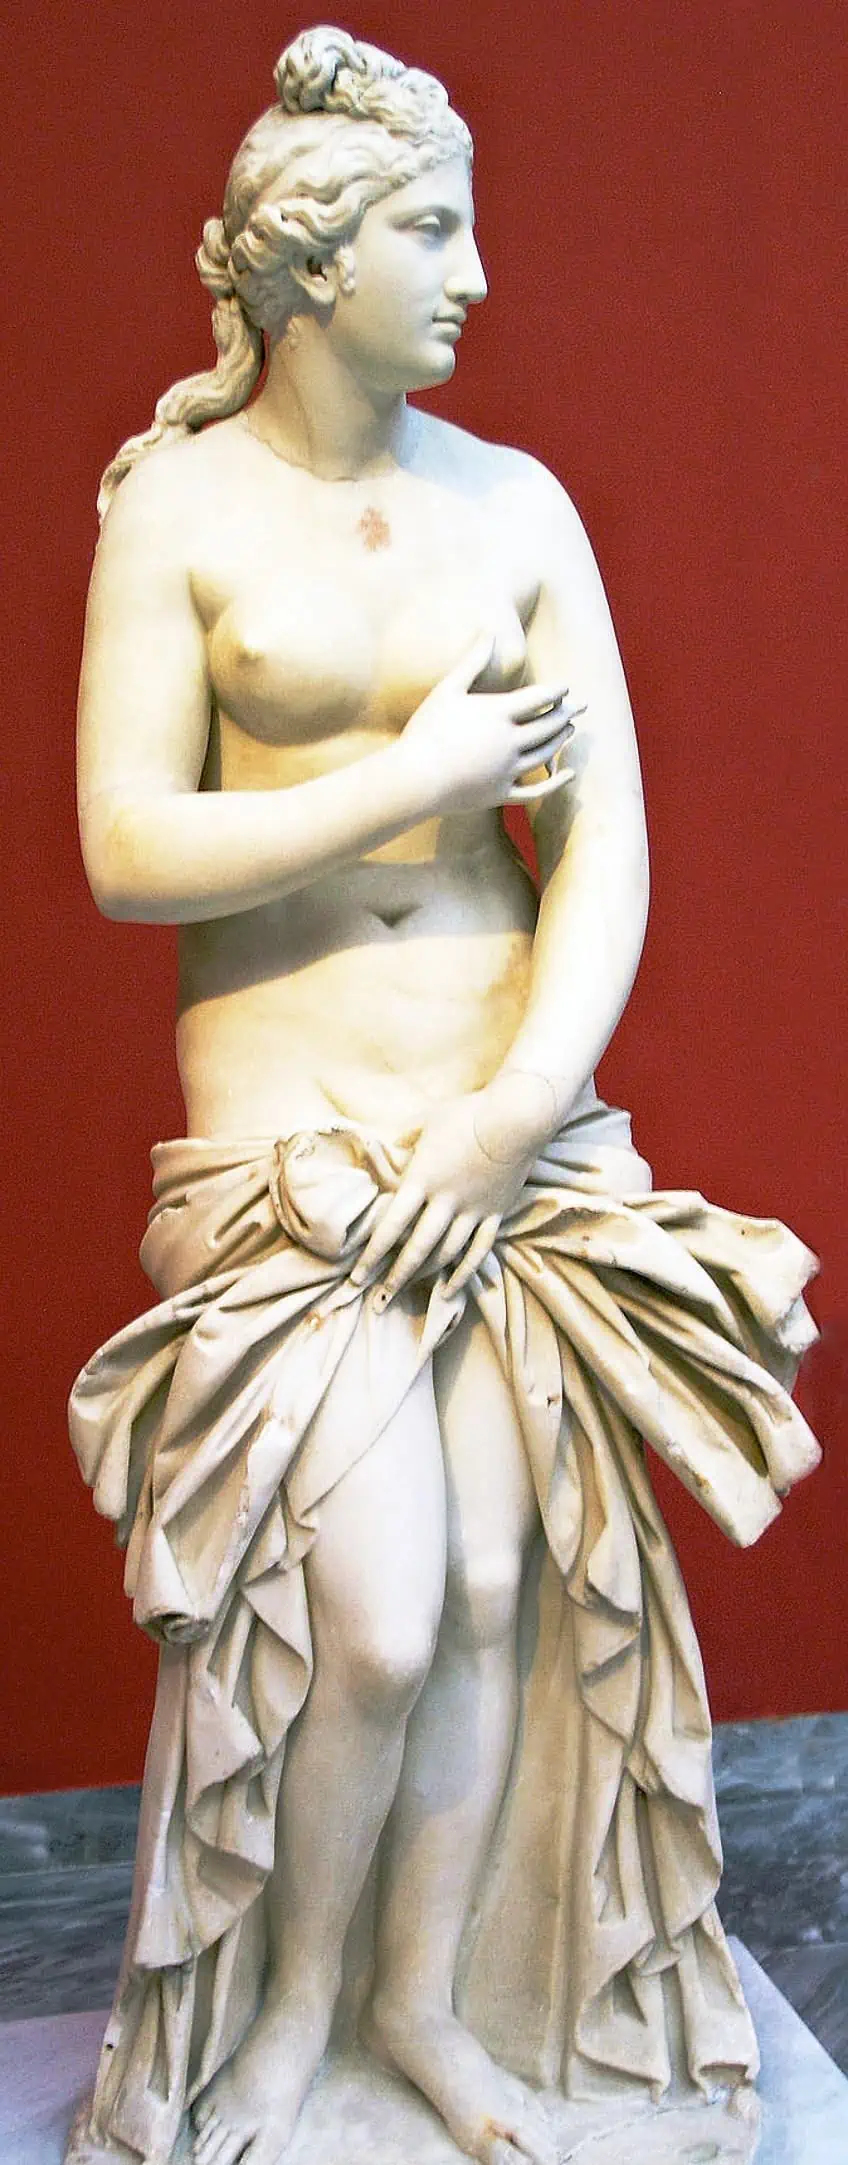 Auf wem basiert die Venus de Milo-Skulptur?